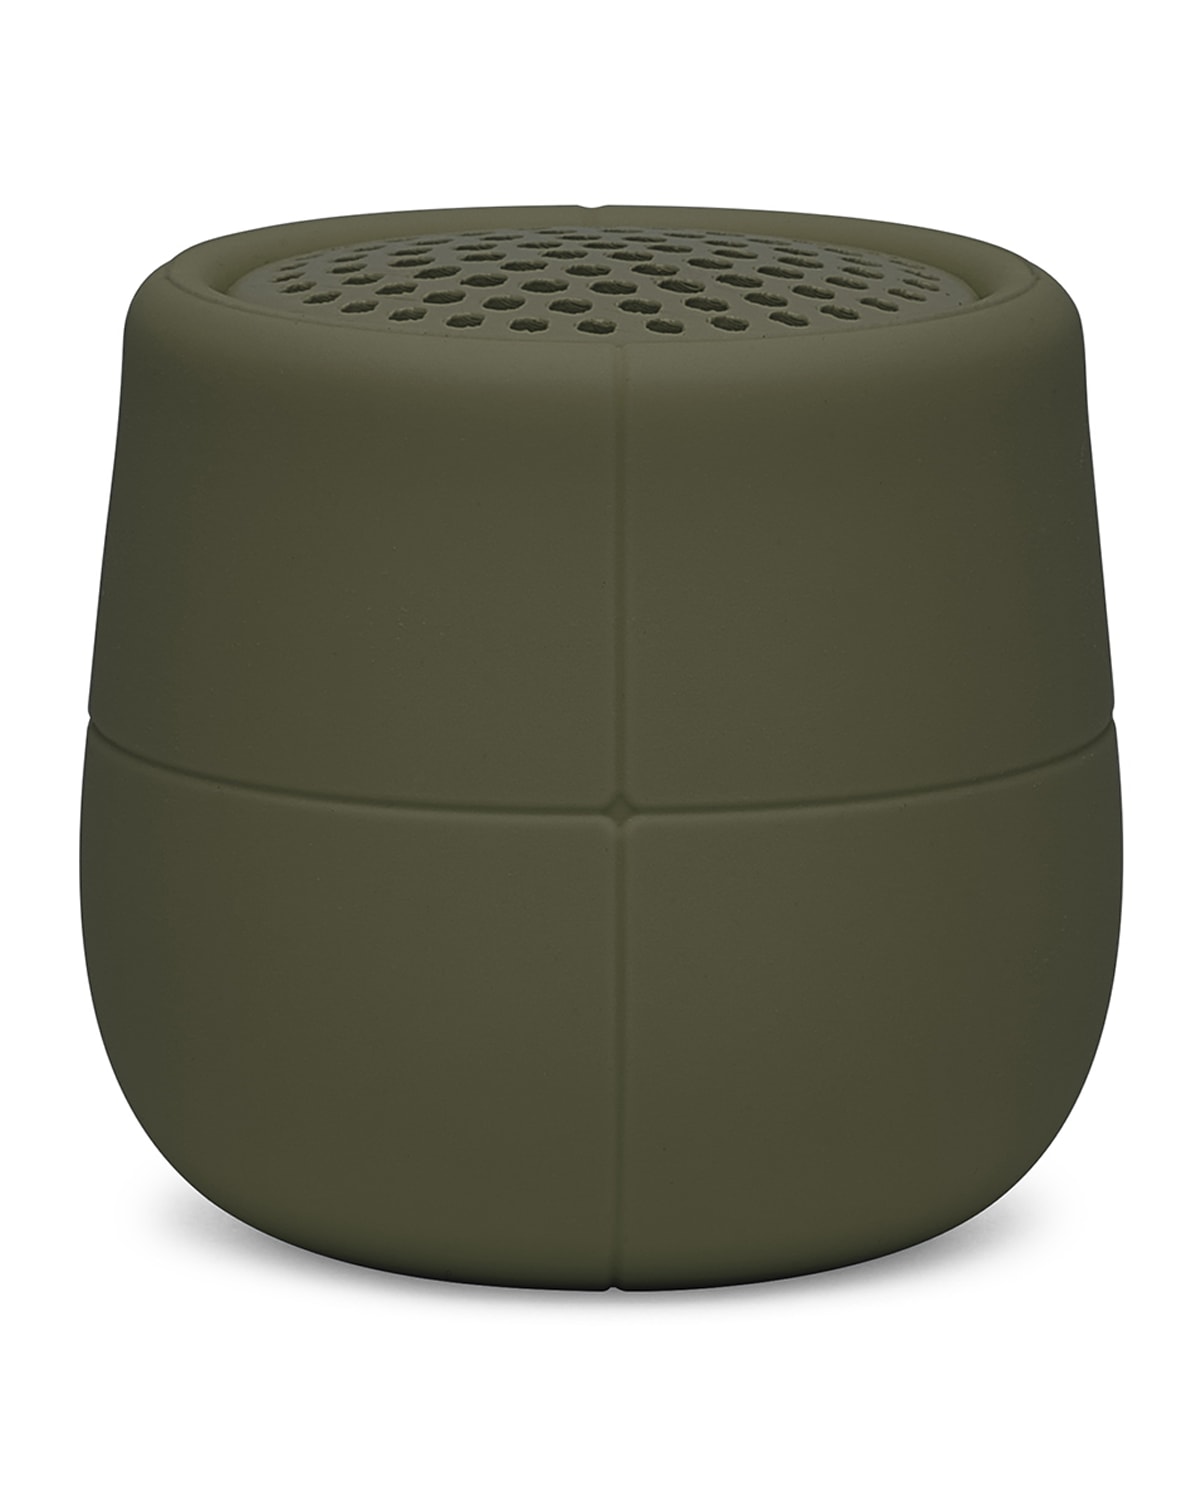 Lexon Design Mino X Water Resistant Floating Bluetooth Speaker